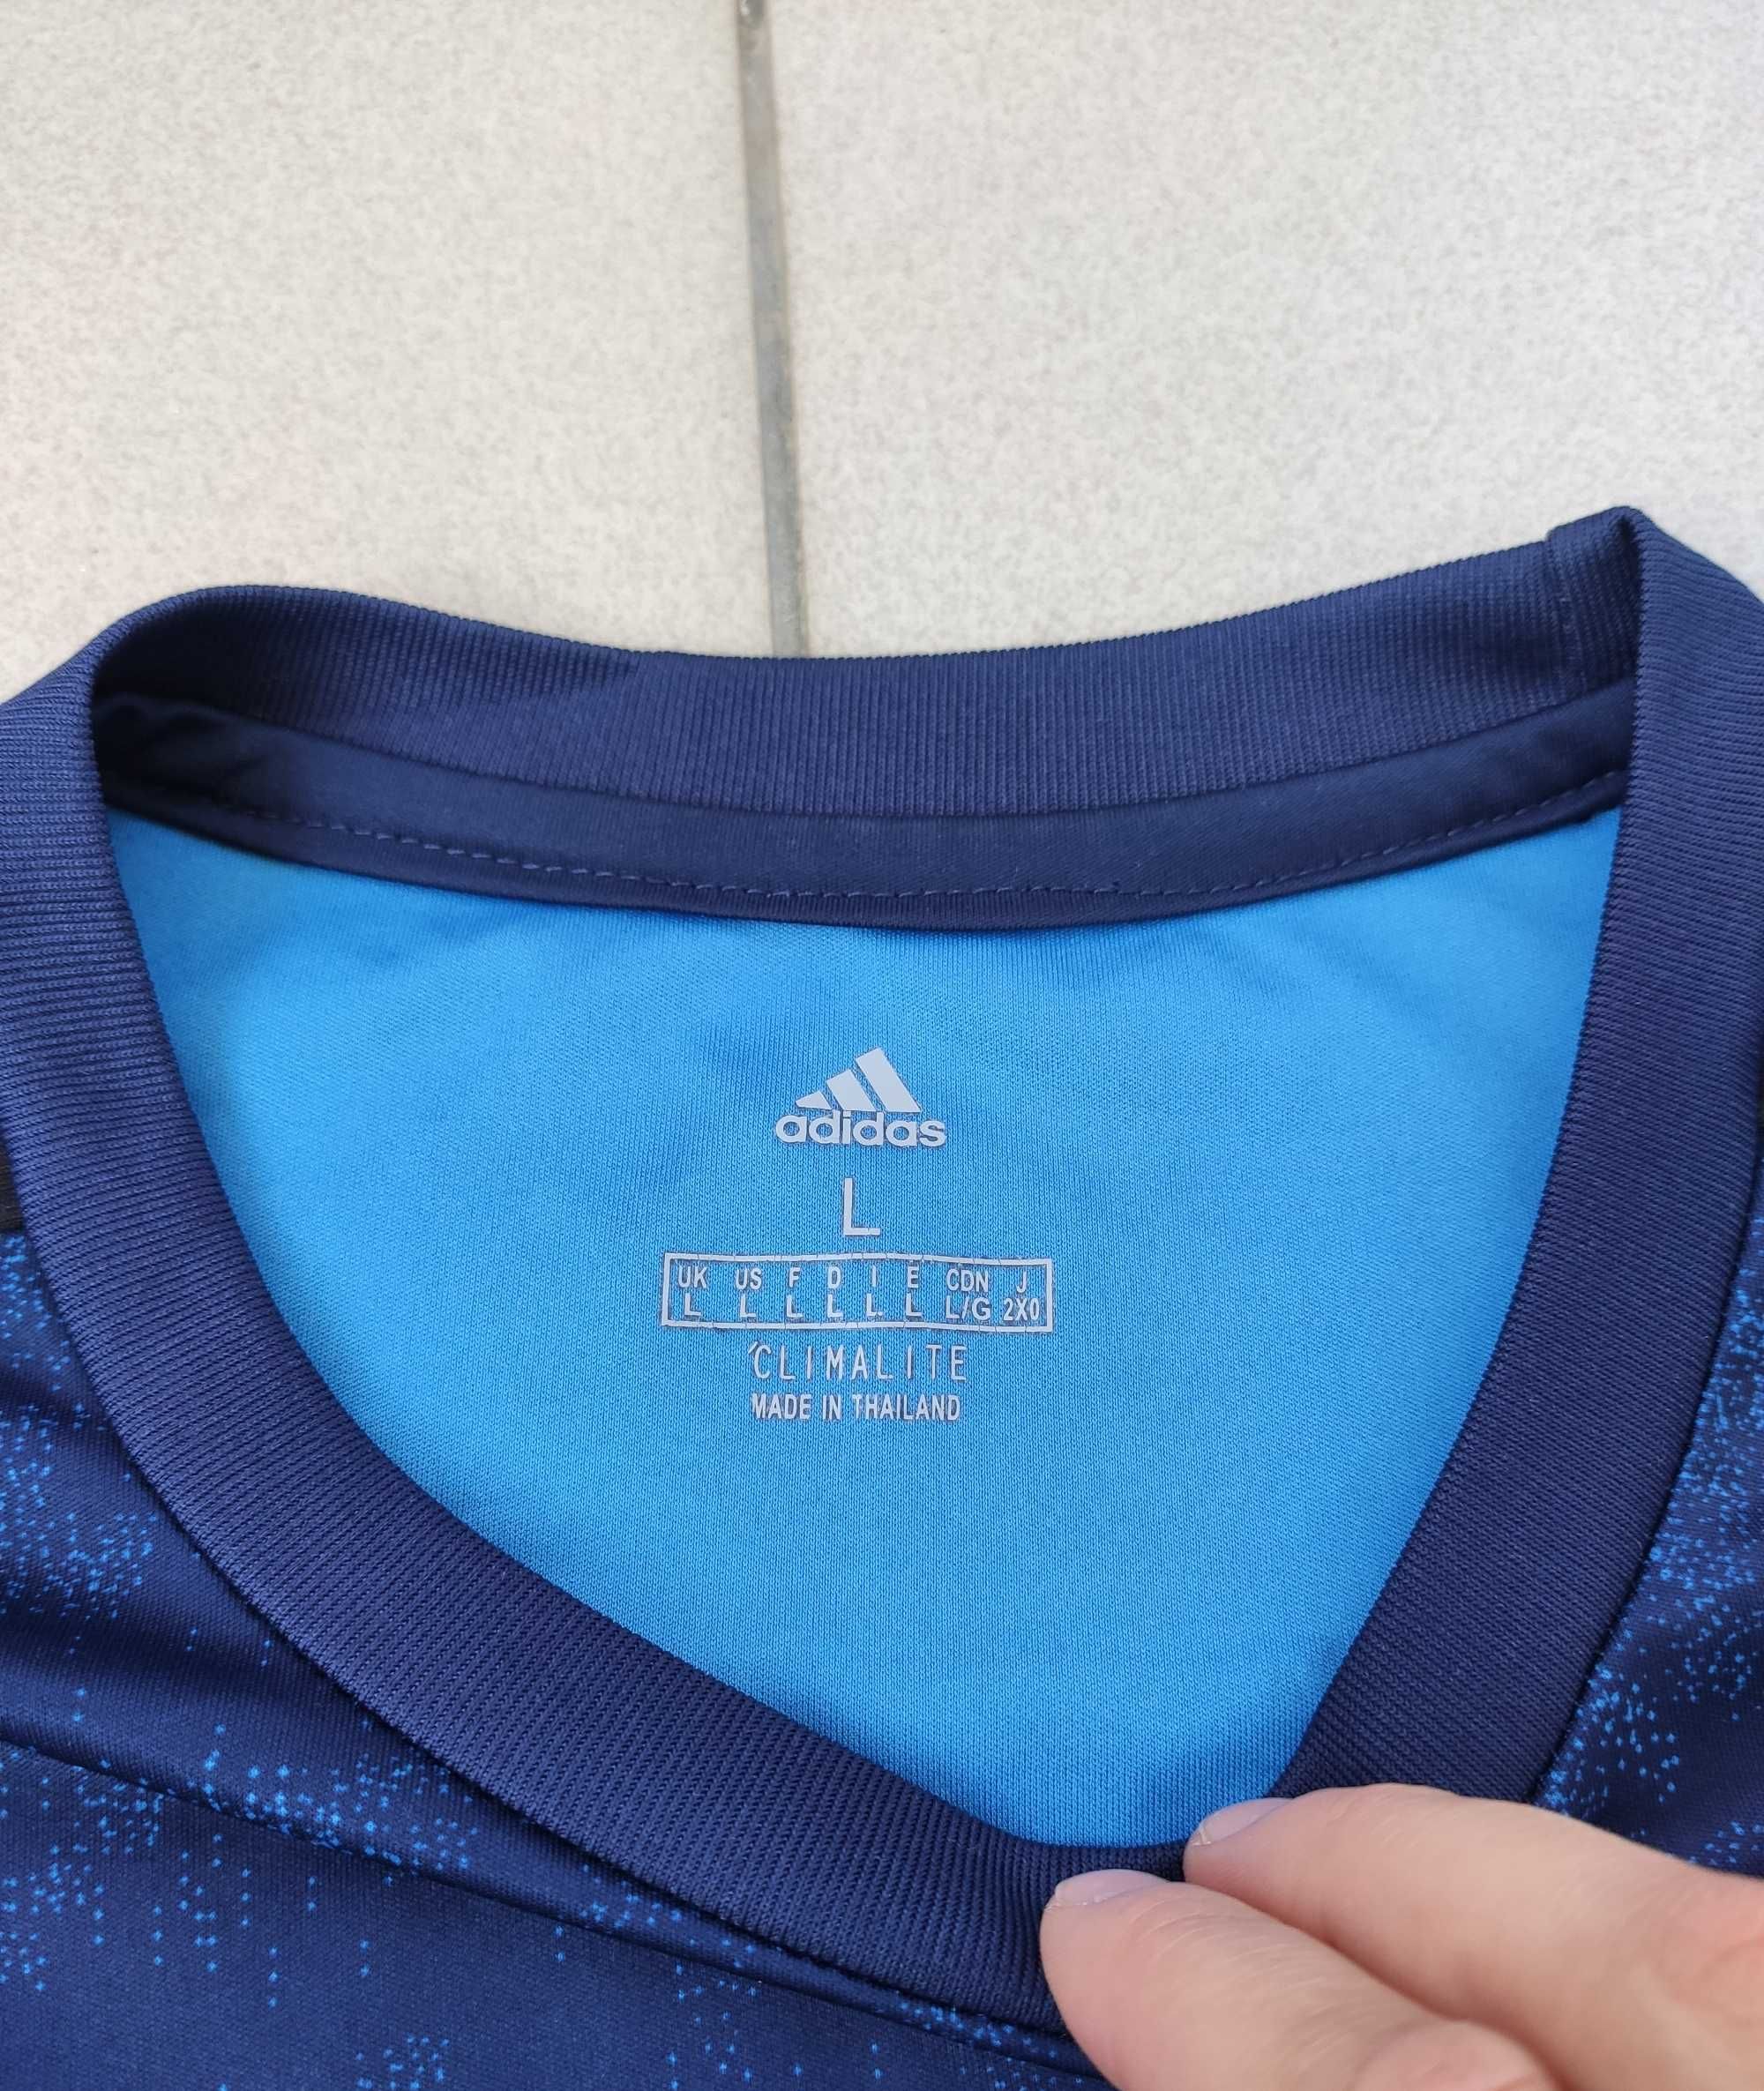 Koszulka piłkarska Adidas Real Madryt Lavard sportowa r. L